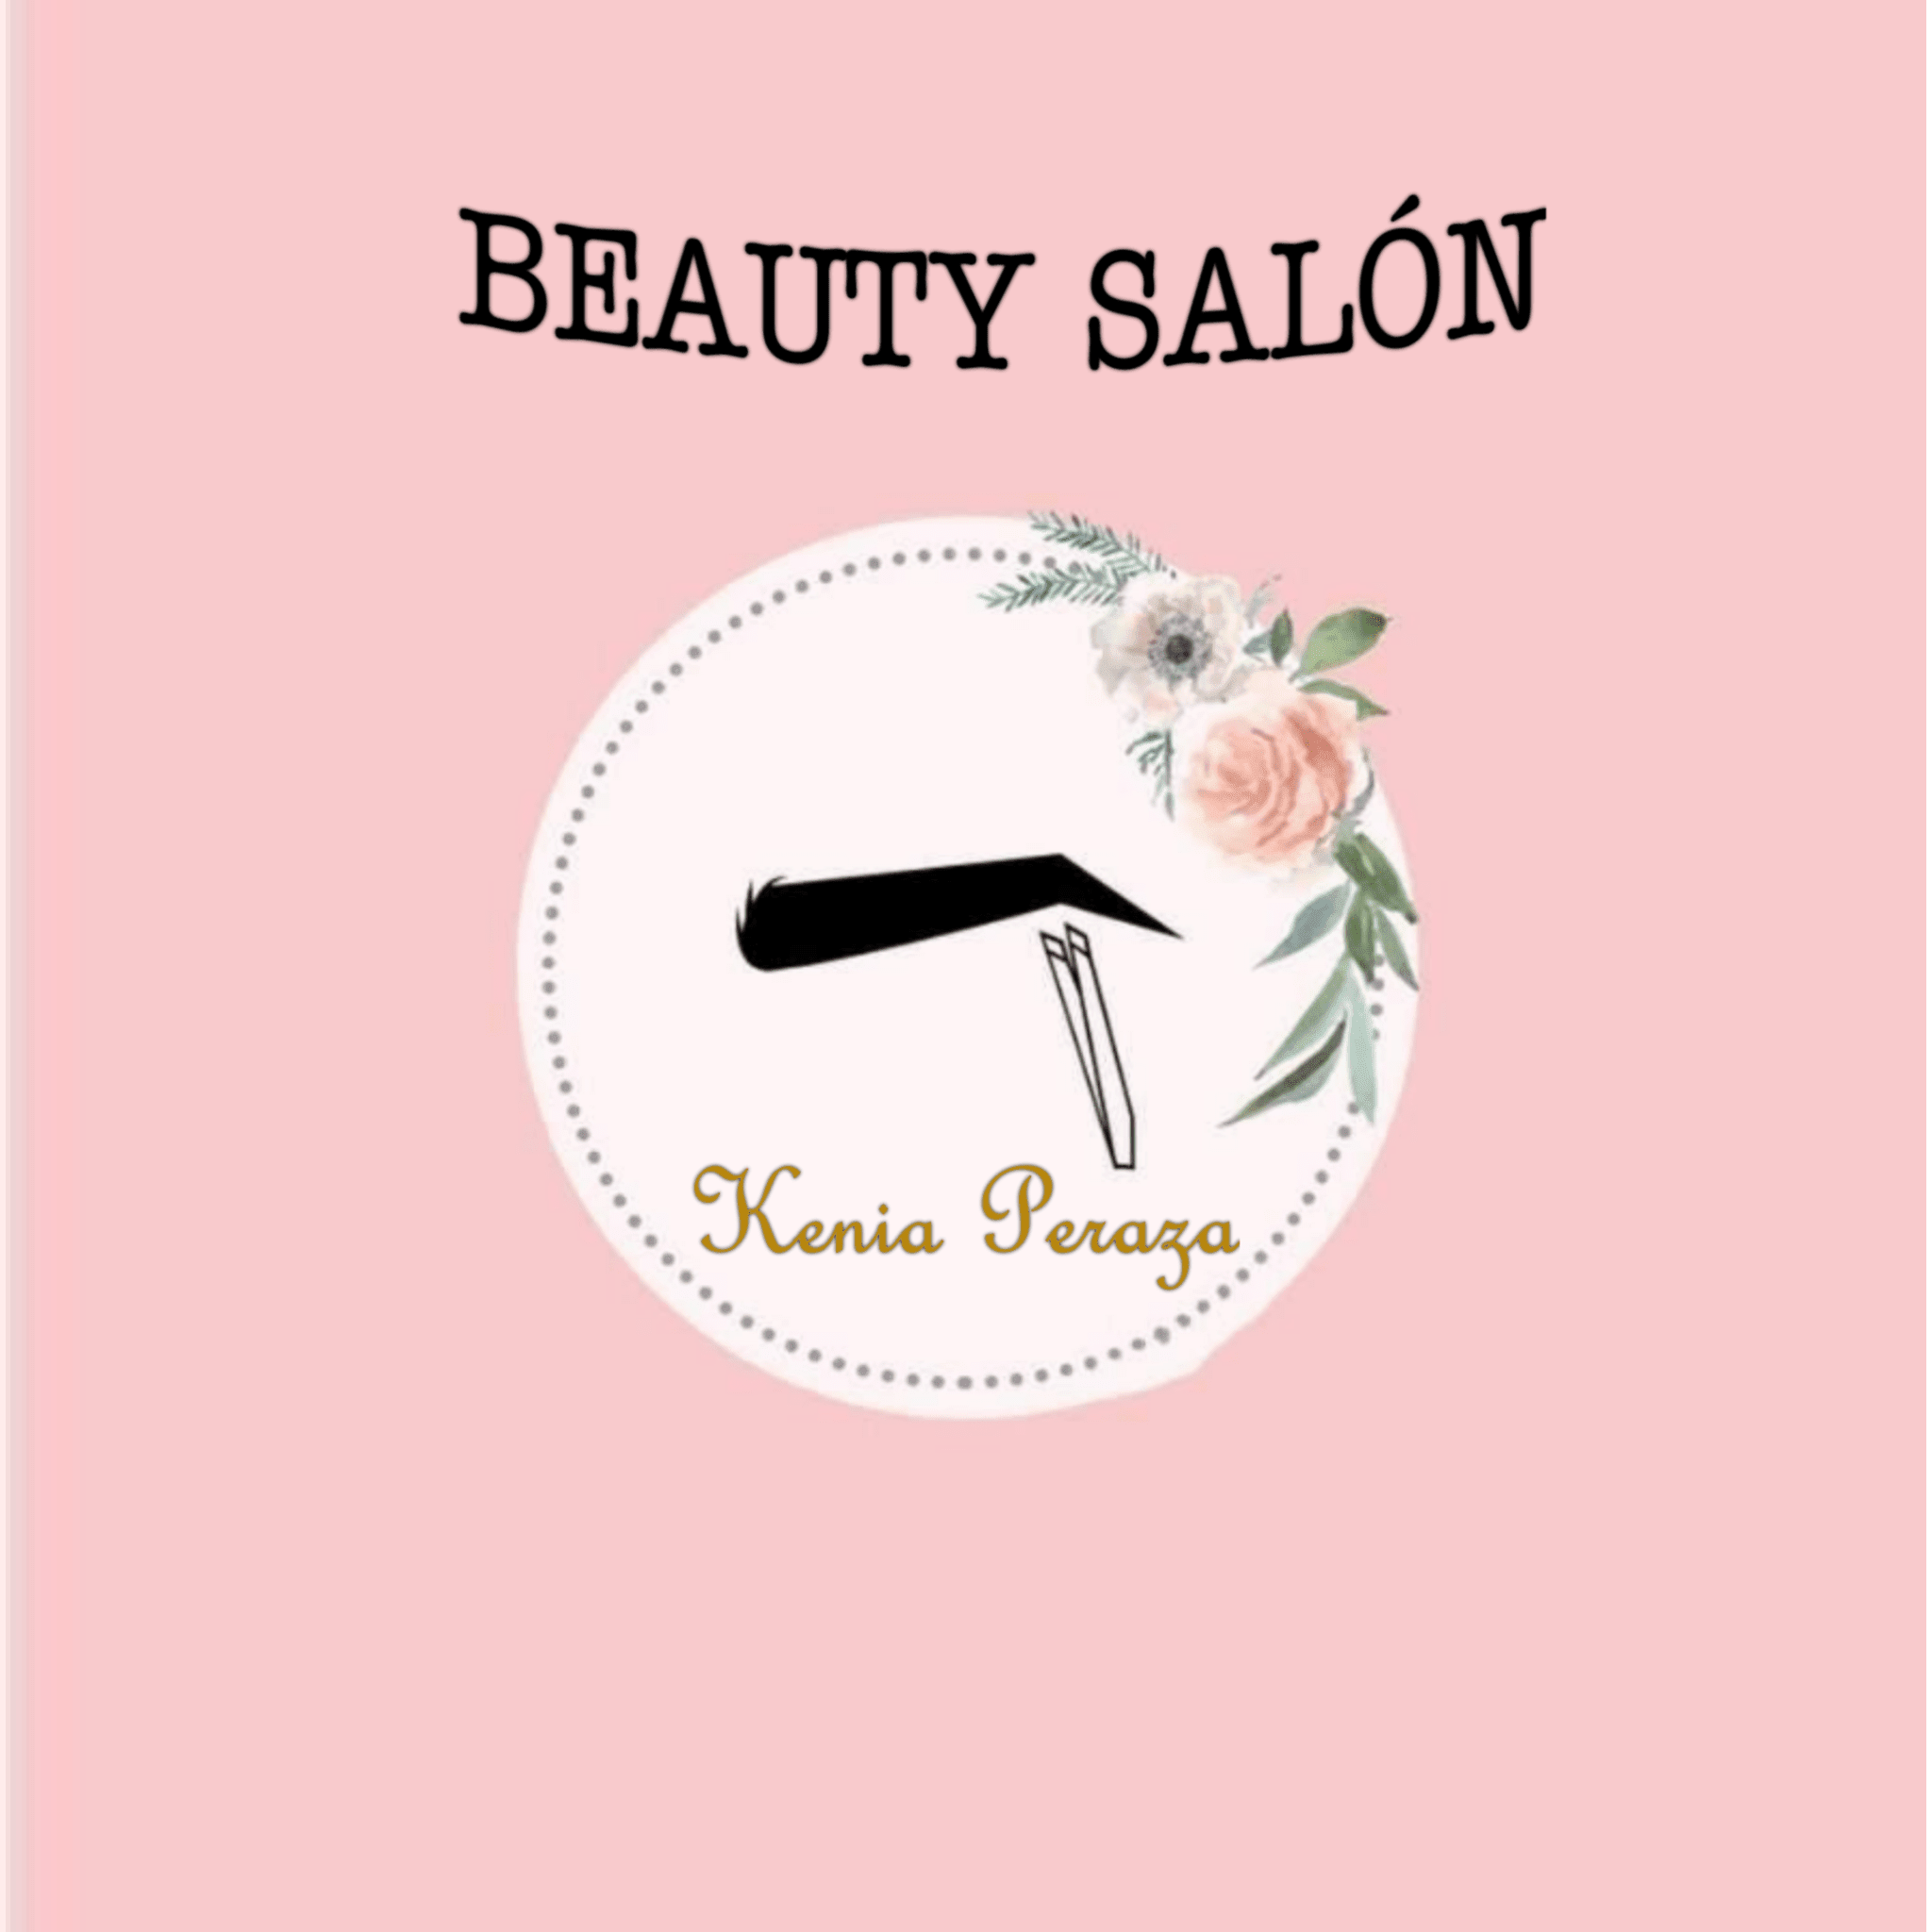 Beauty Salón Kenia Peraza